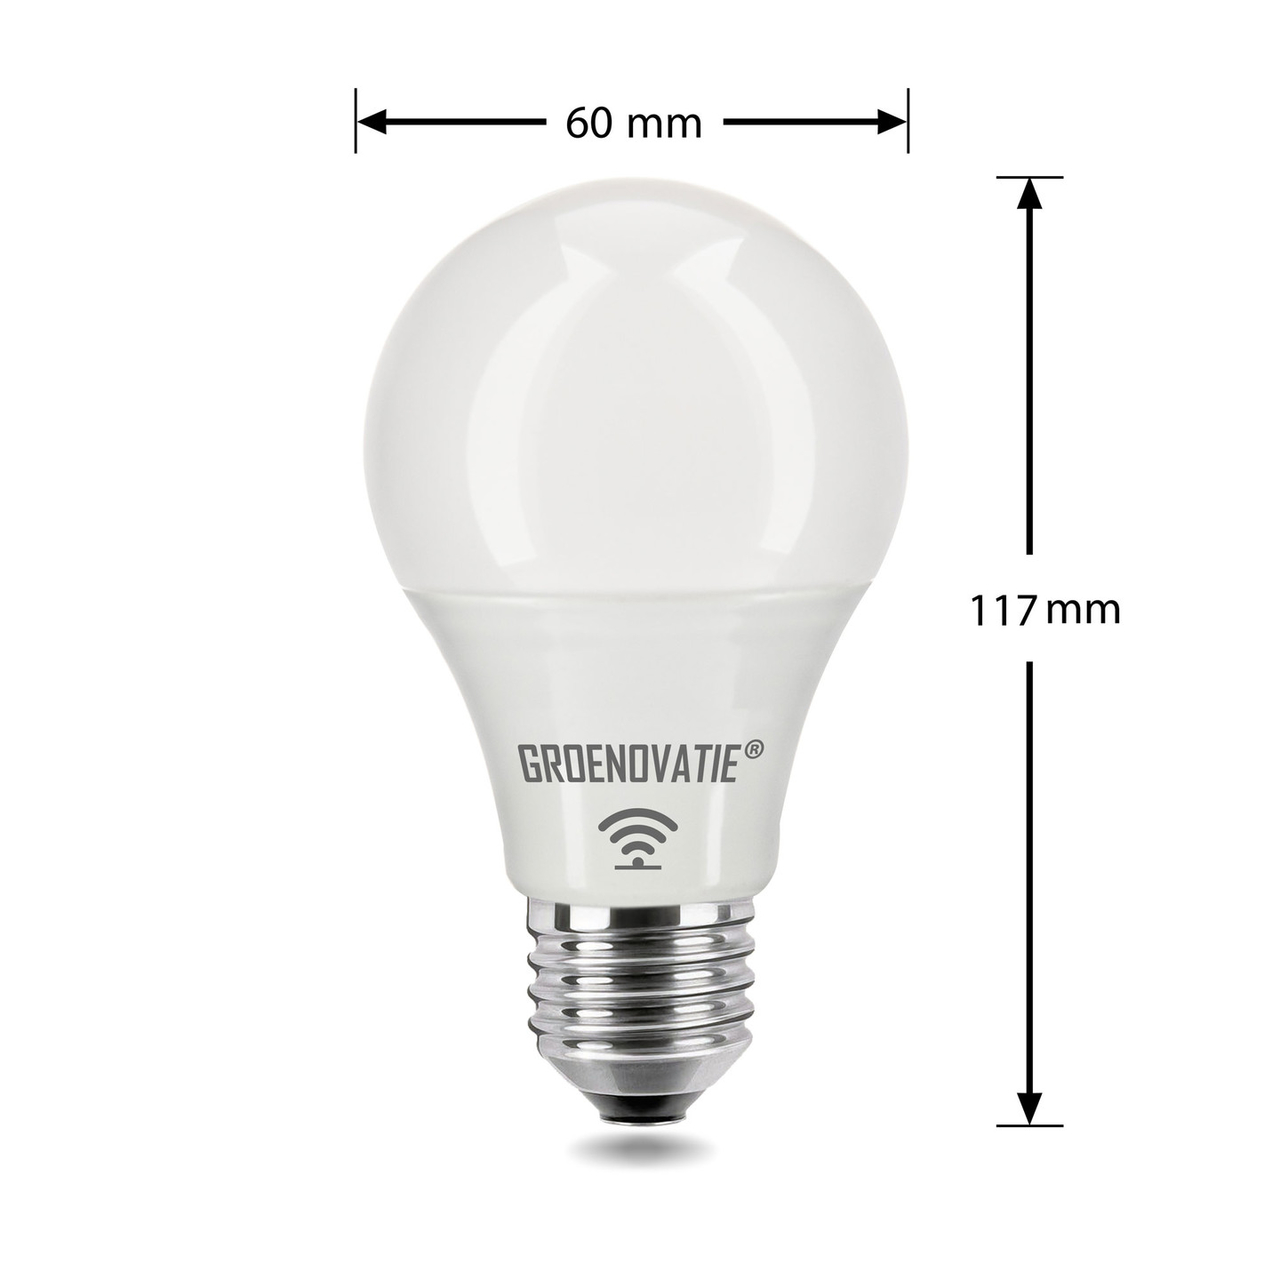 stortbui Krijger fonds E27 LED Lamp 5W, HF Bewegingsmdelder - Microwave Sensor